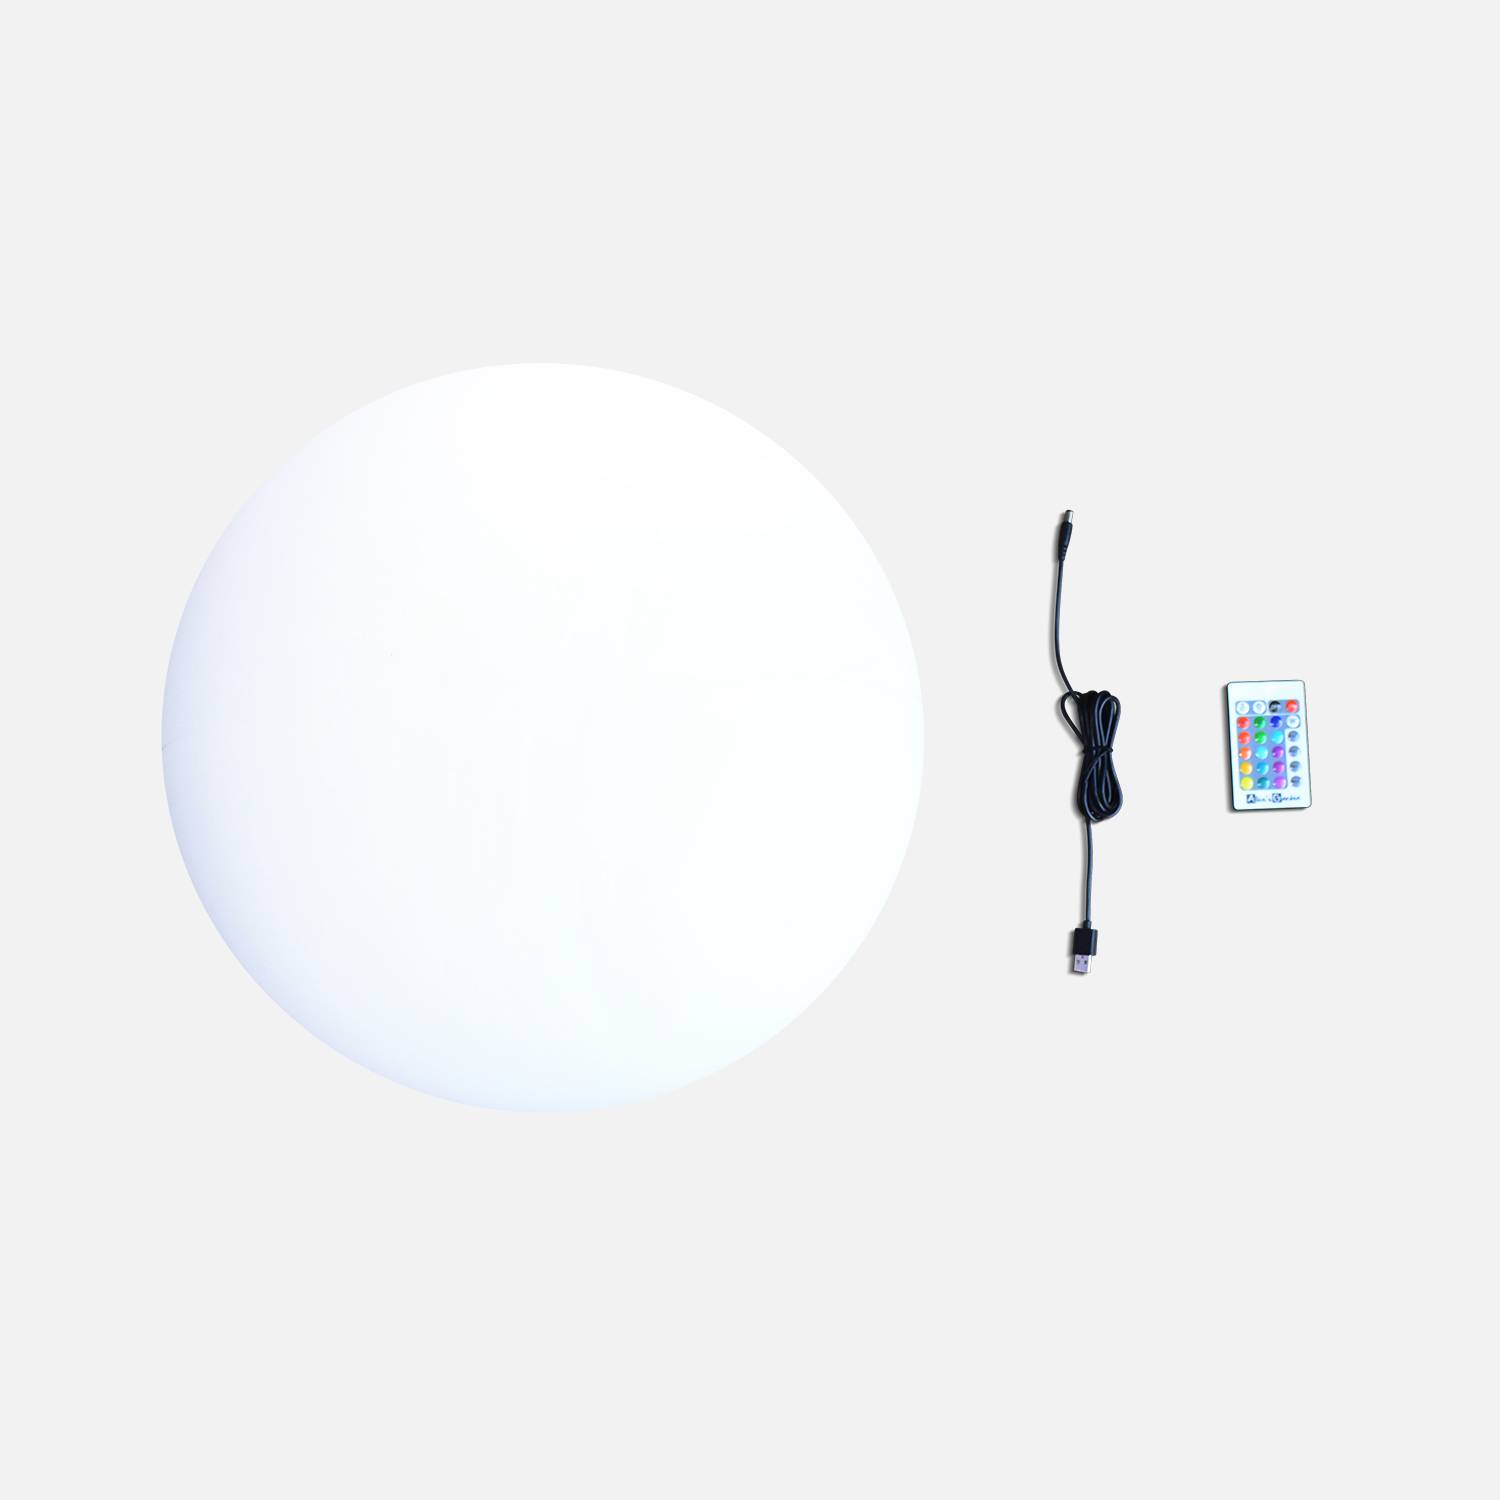 Lampada LED 40cm - Sfera decorativa luminosa,16 colori, 40 cm, caricabatterie ad induzione senza fili Photo5